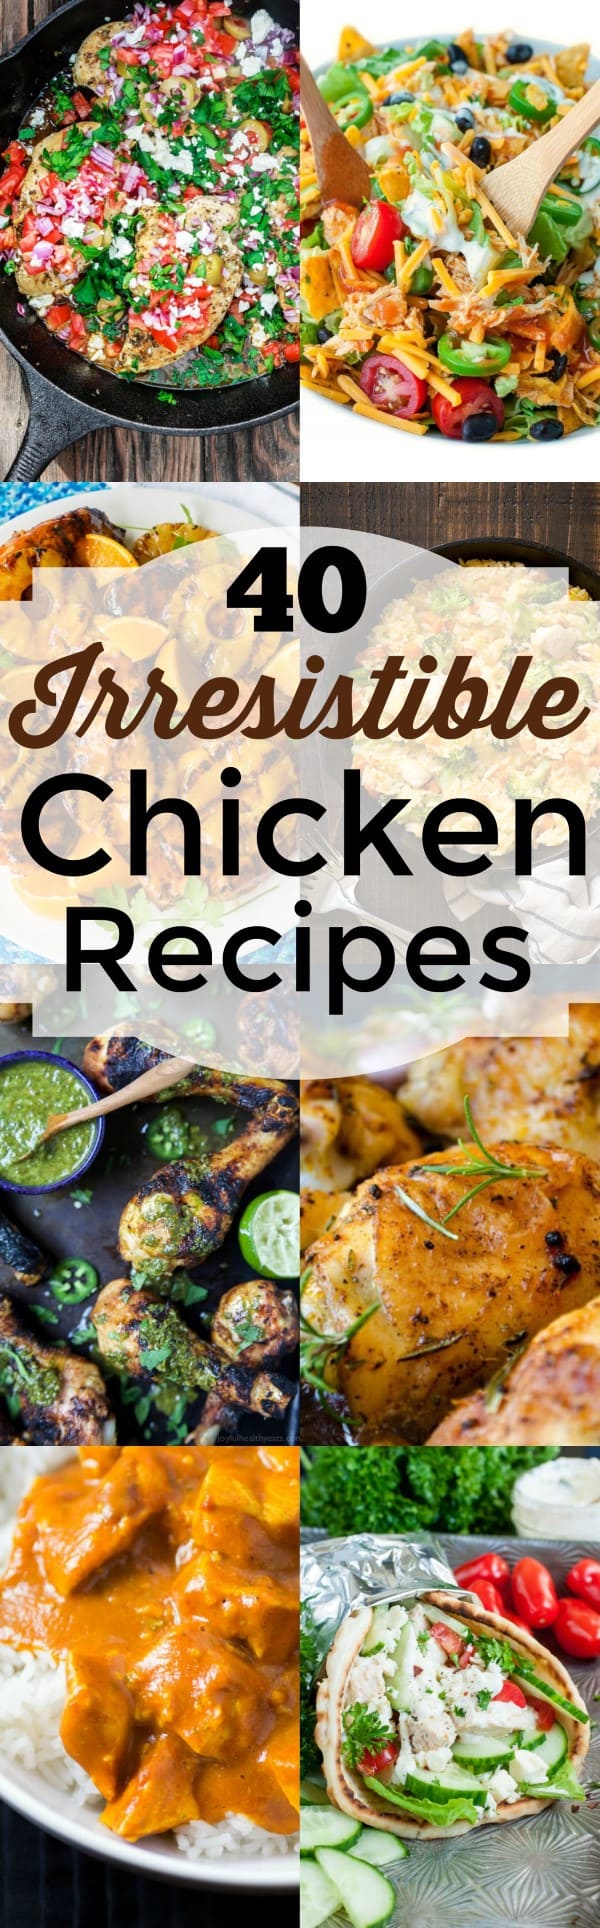 40 Irresistible Chicken Recipes